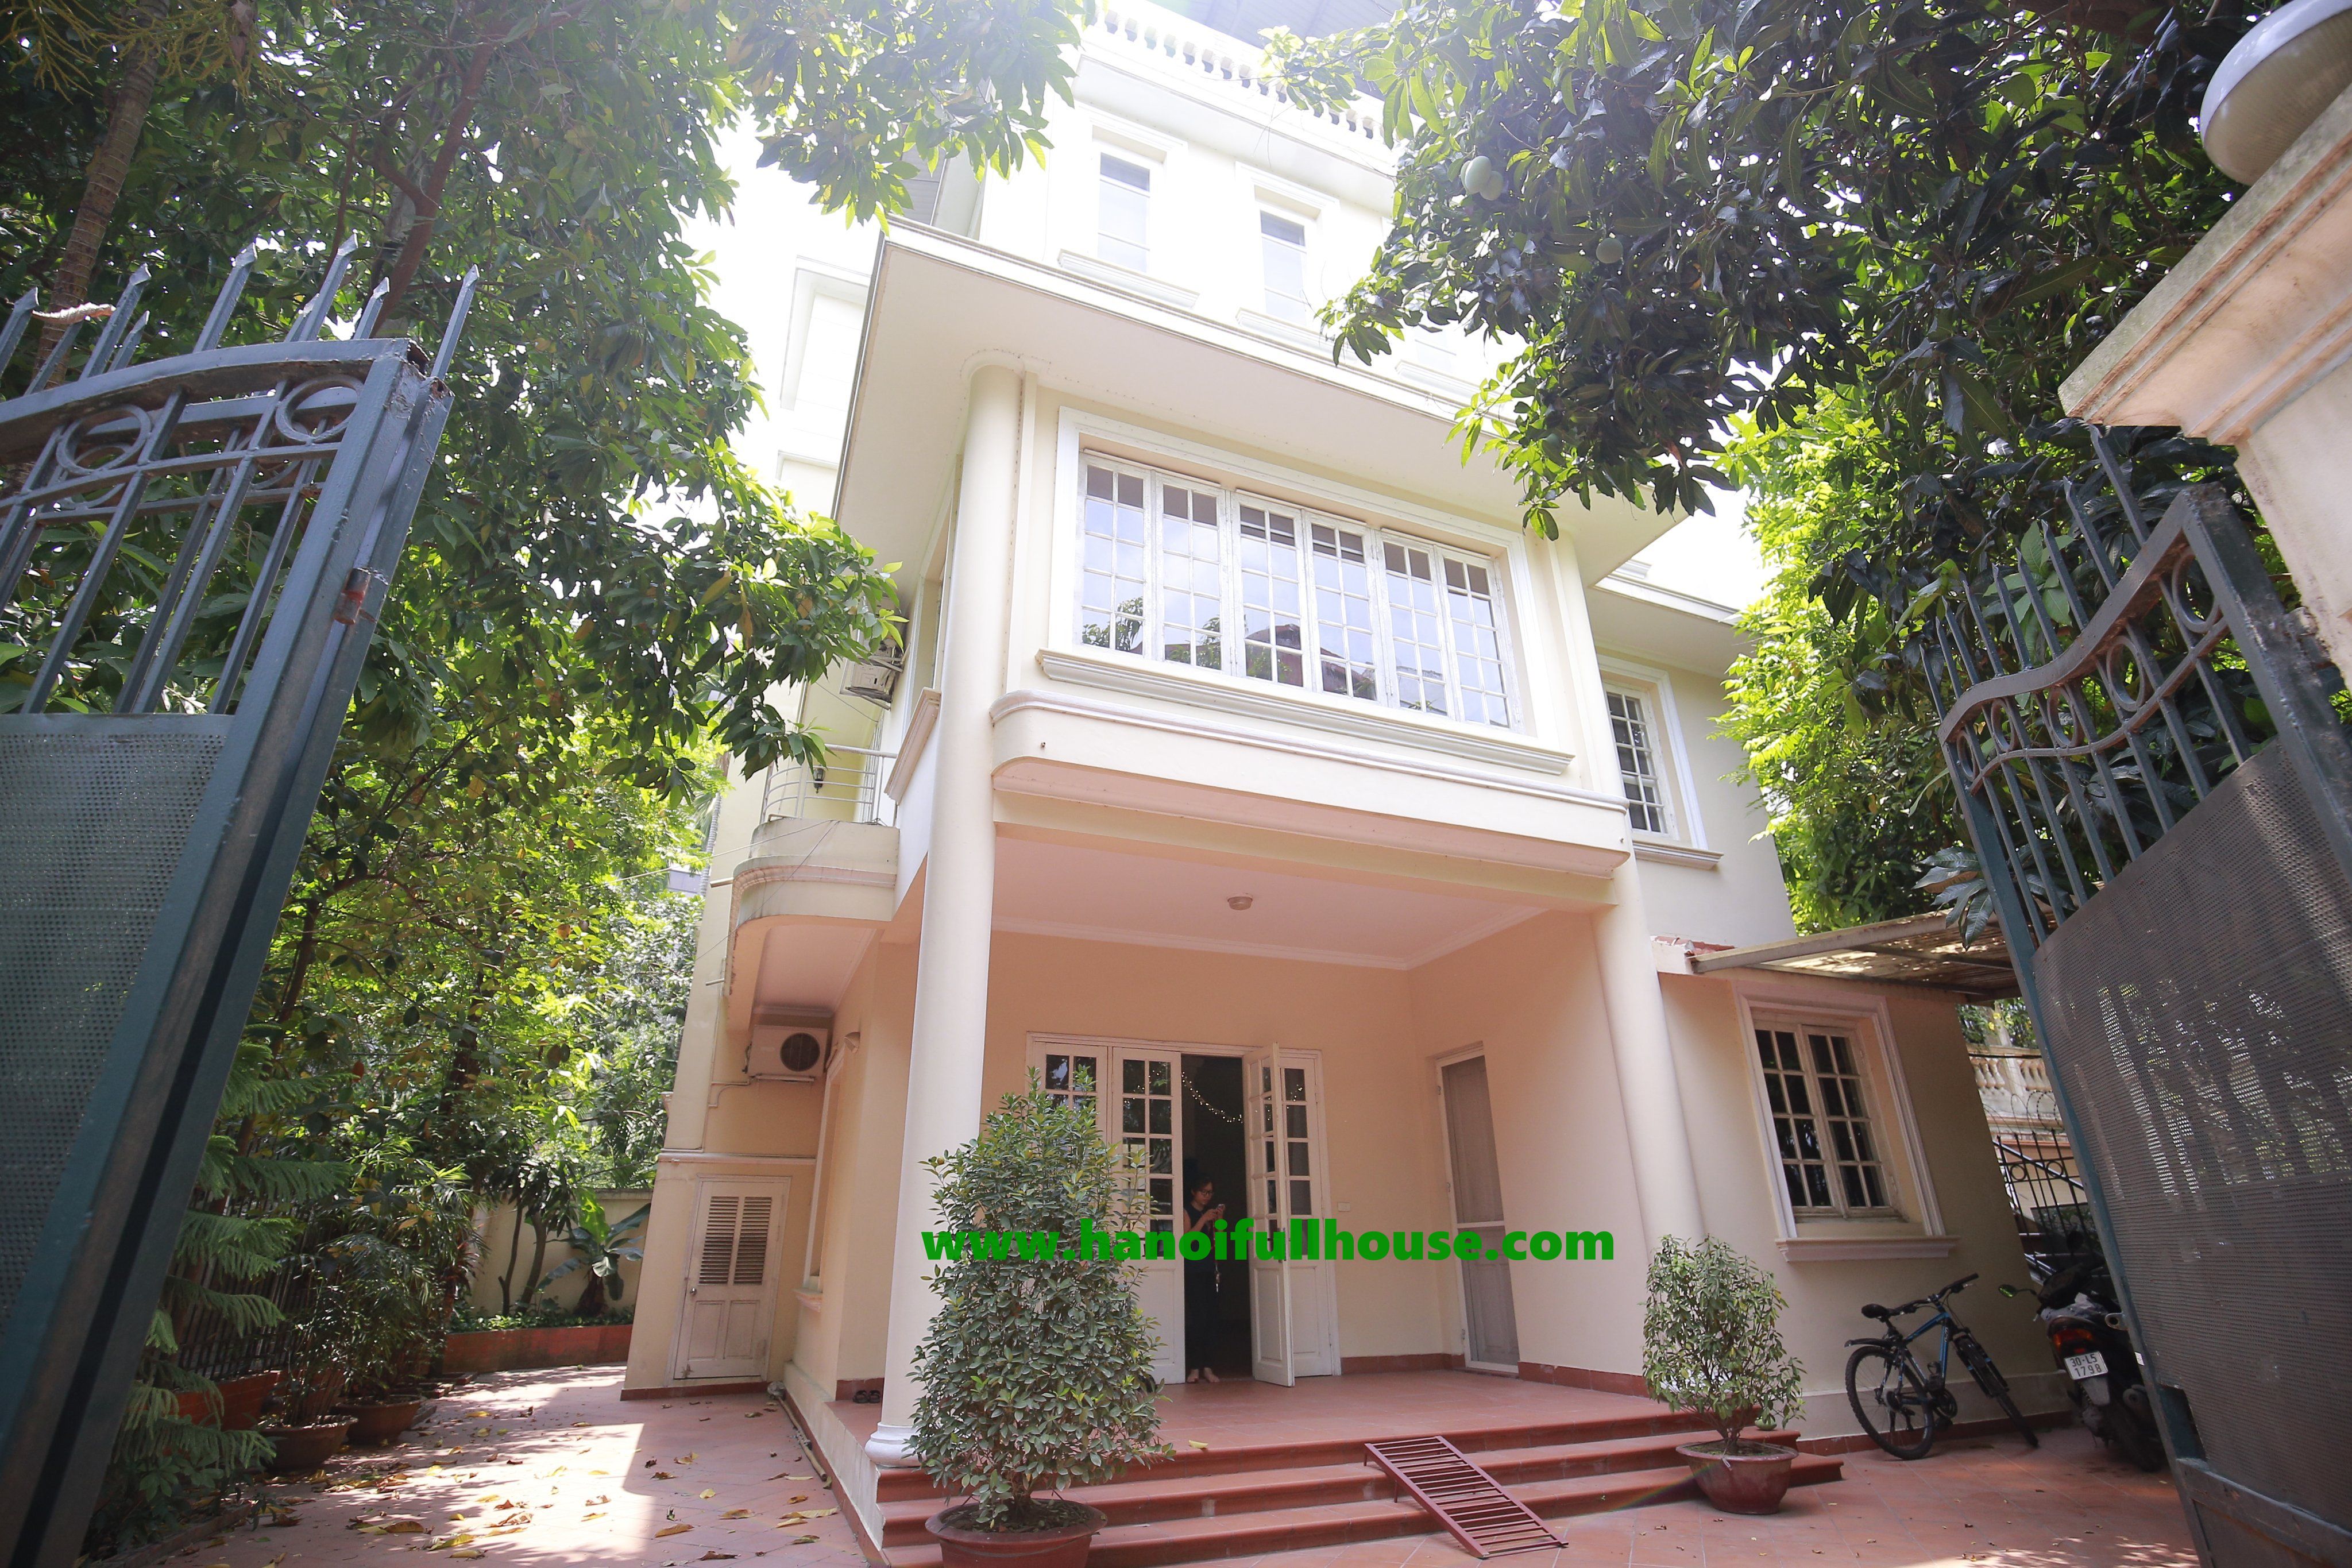 Spacious and bright 4-bedroom villa in To Ngoc Van street